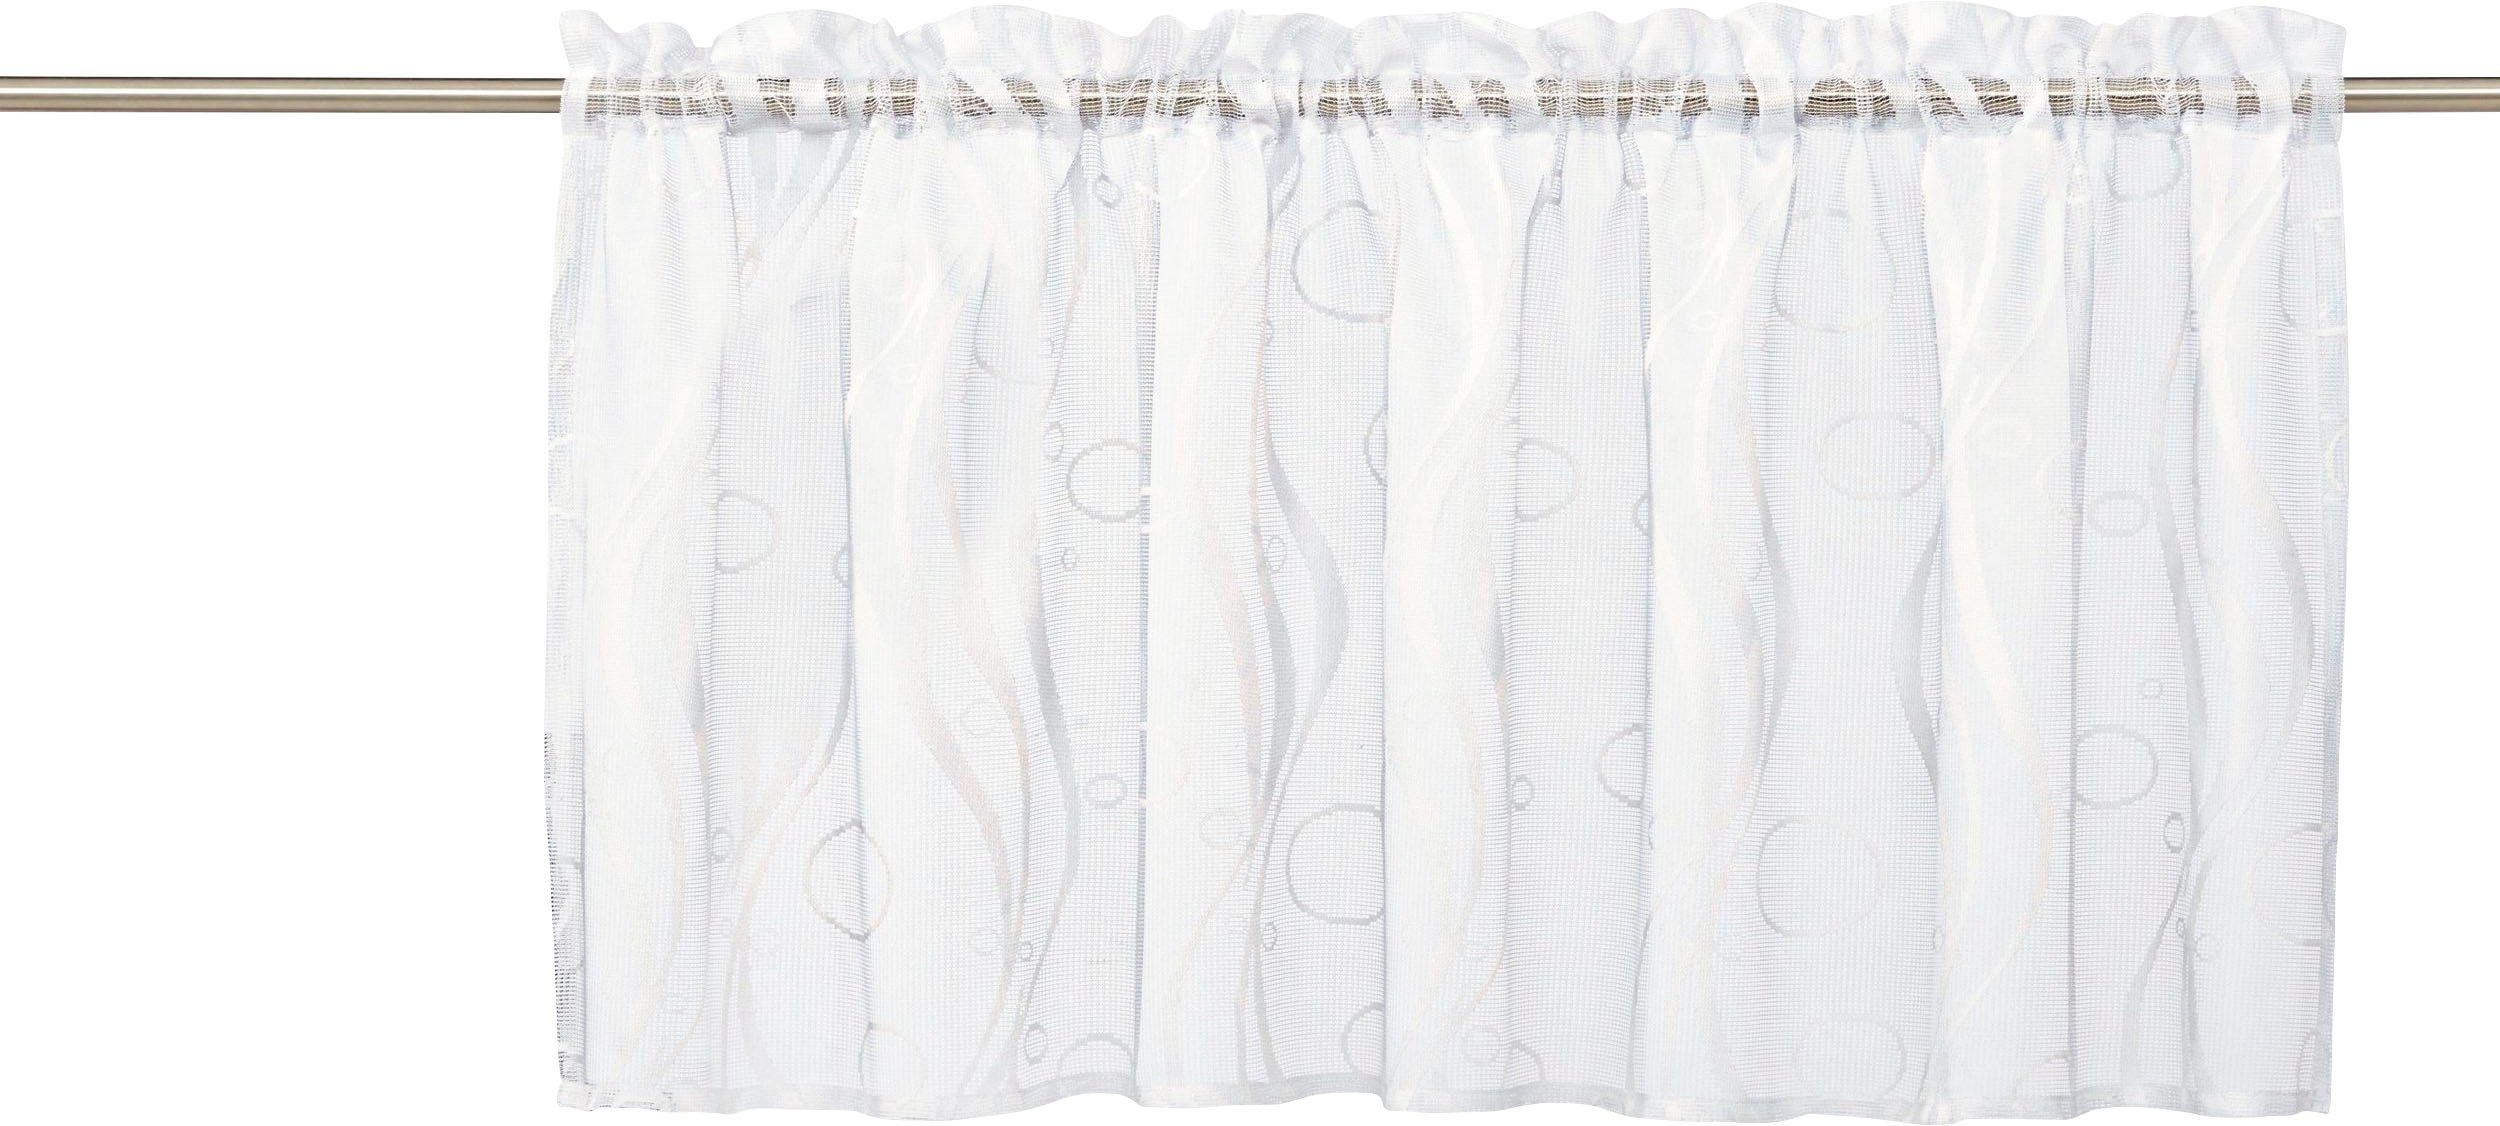 St), transparent, Polyester Ramon, (1 my home, Jacquard, Jacquard, Scheibengardine Transparent, Stangendurchzug